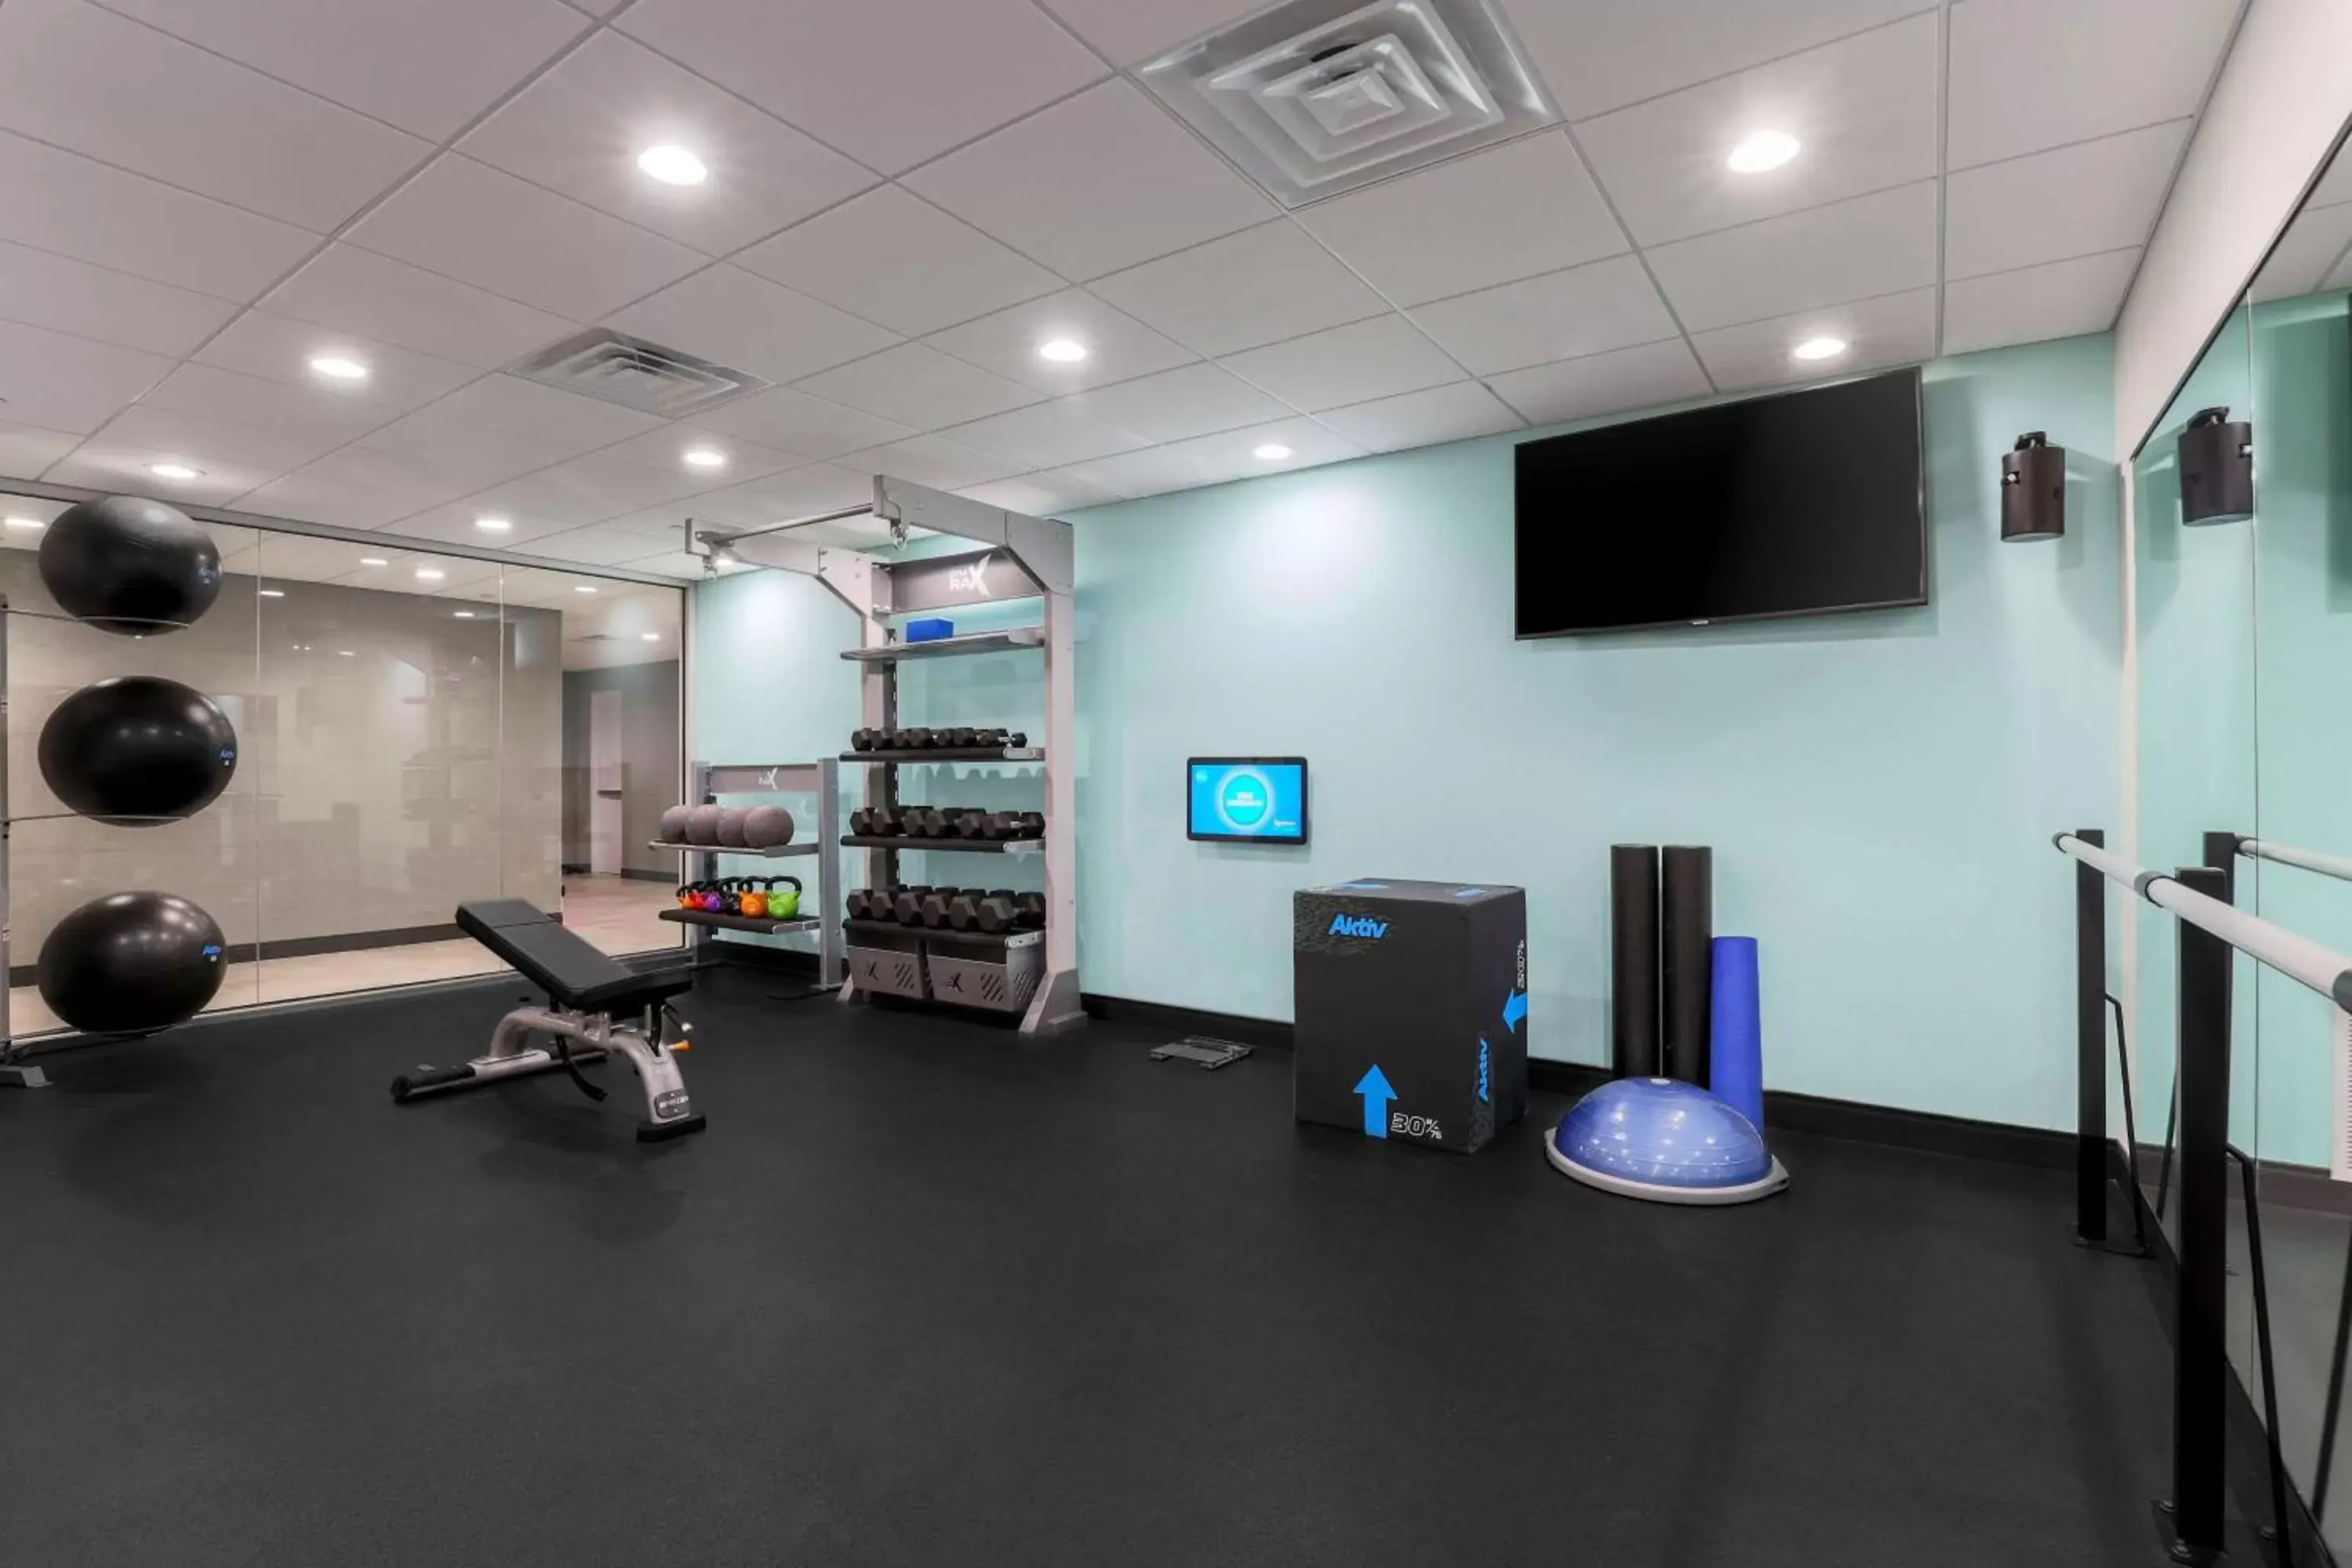 Fitness centre/facilities, Fitness Center/Facilities in Tru By Hilton Dallas Market Center